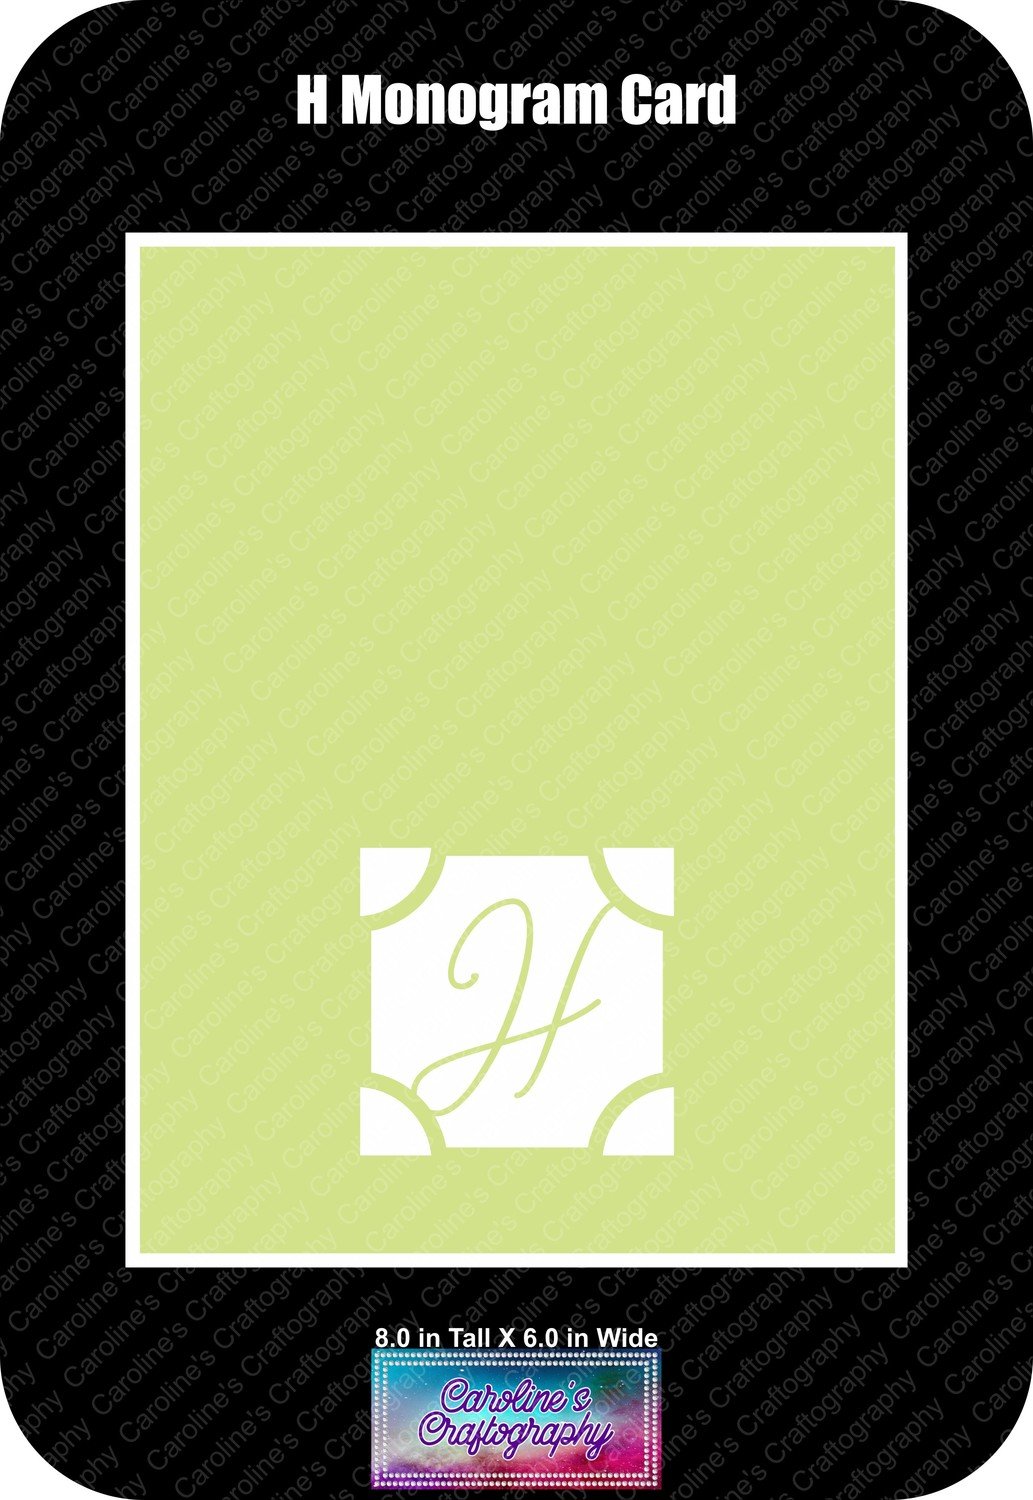 H Monogram Card Base